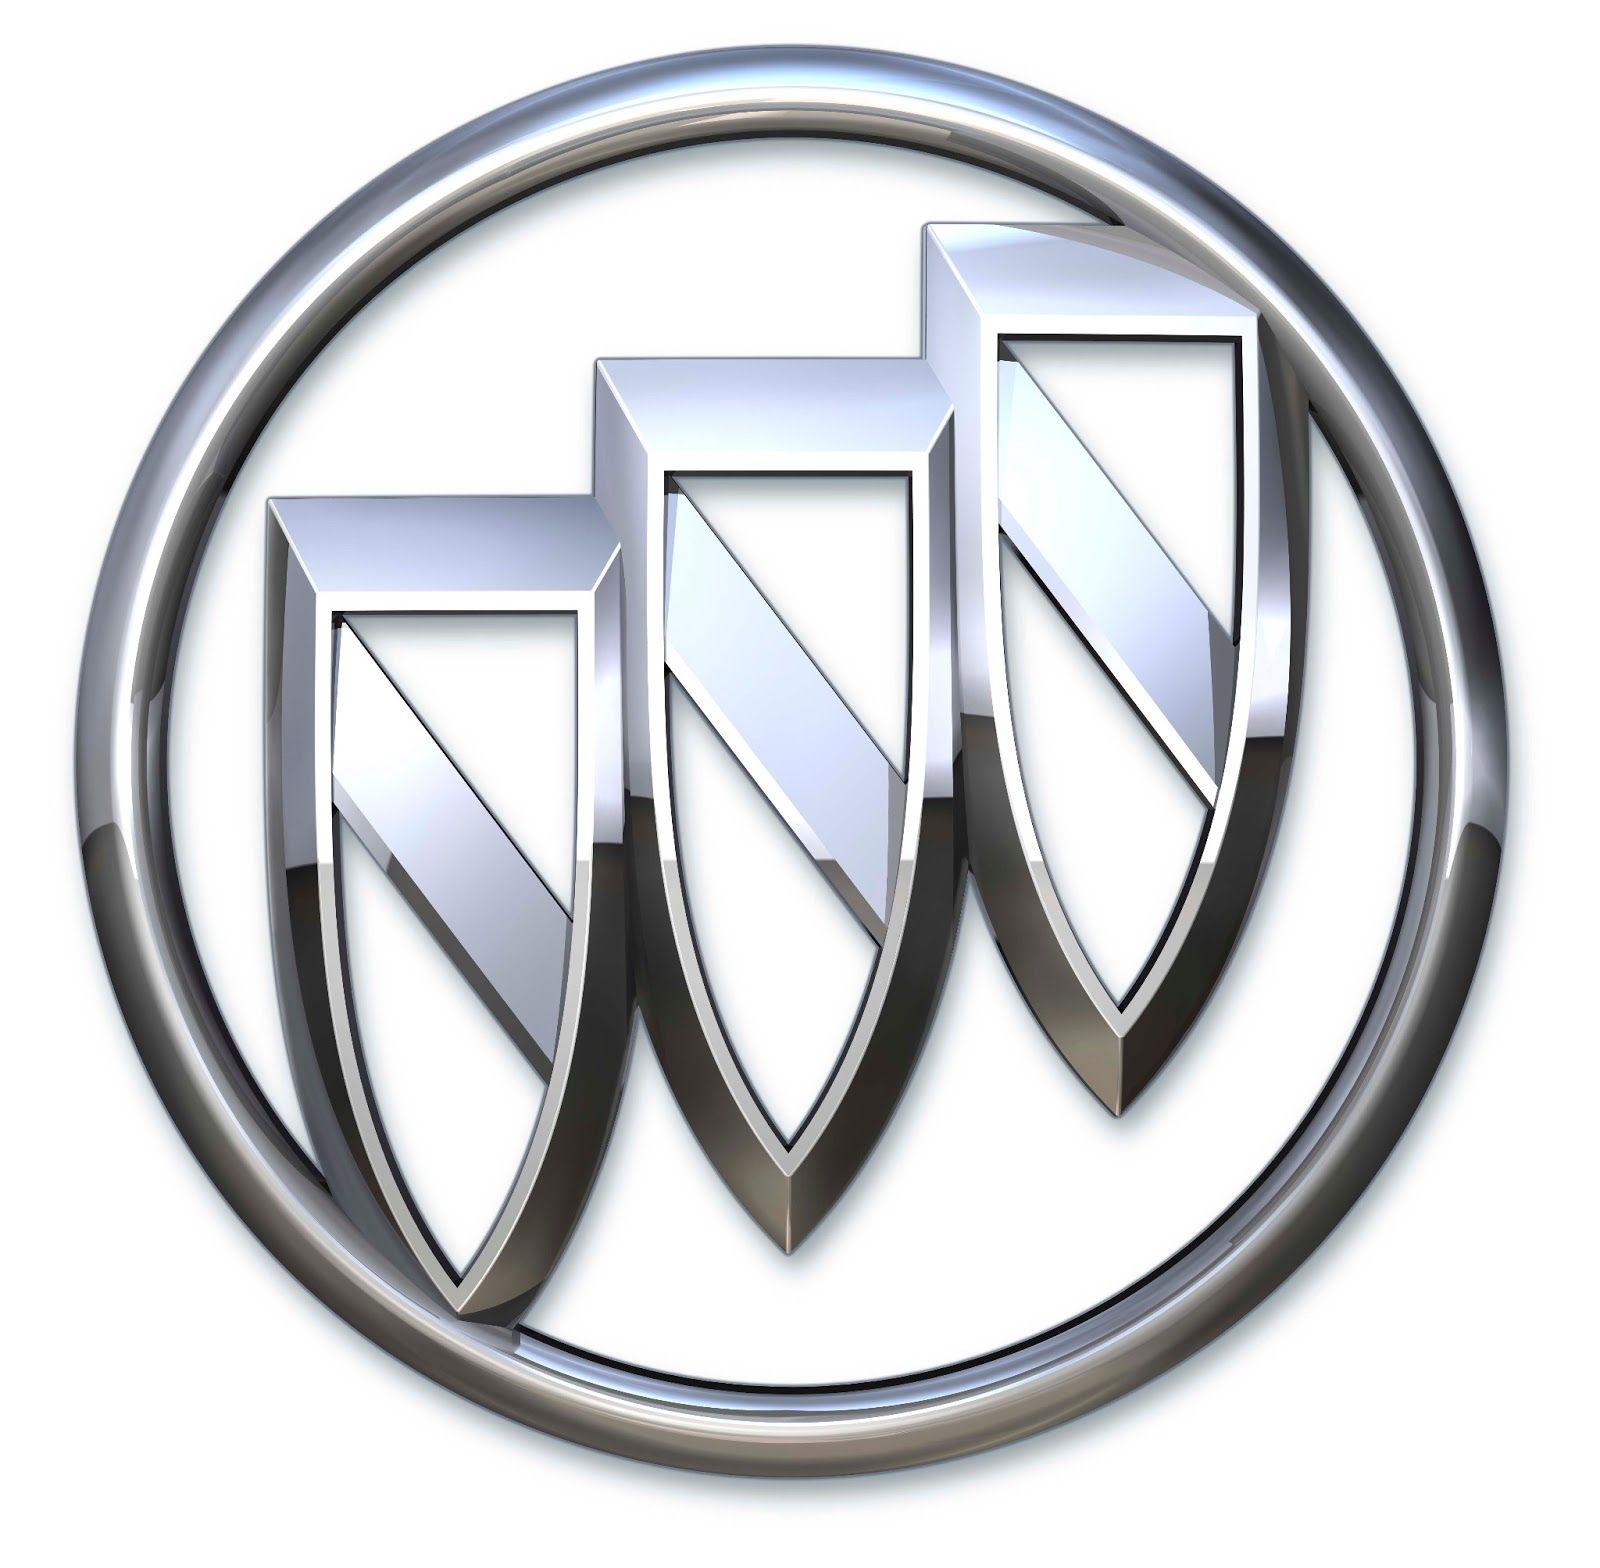 Blue Shield Car Logo - Buick Logo, Buick Car Symbol Meaning and History | Car Brand Names.com